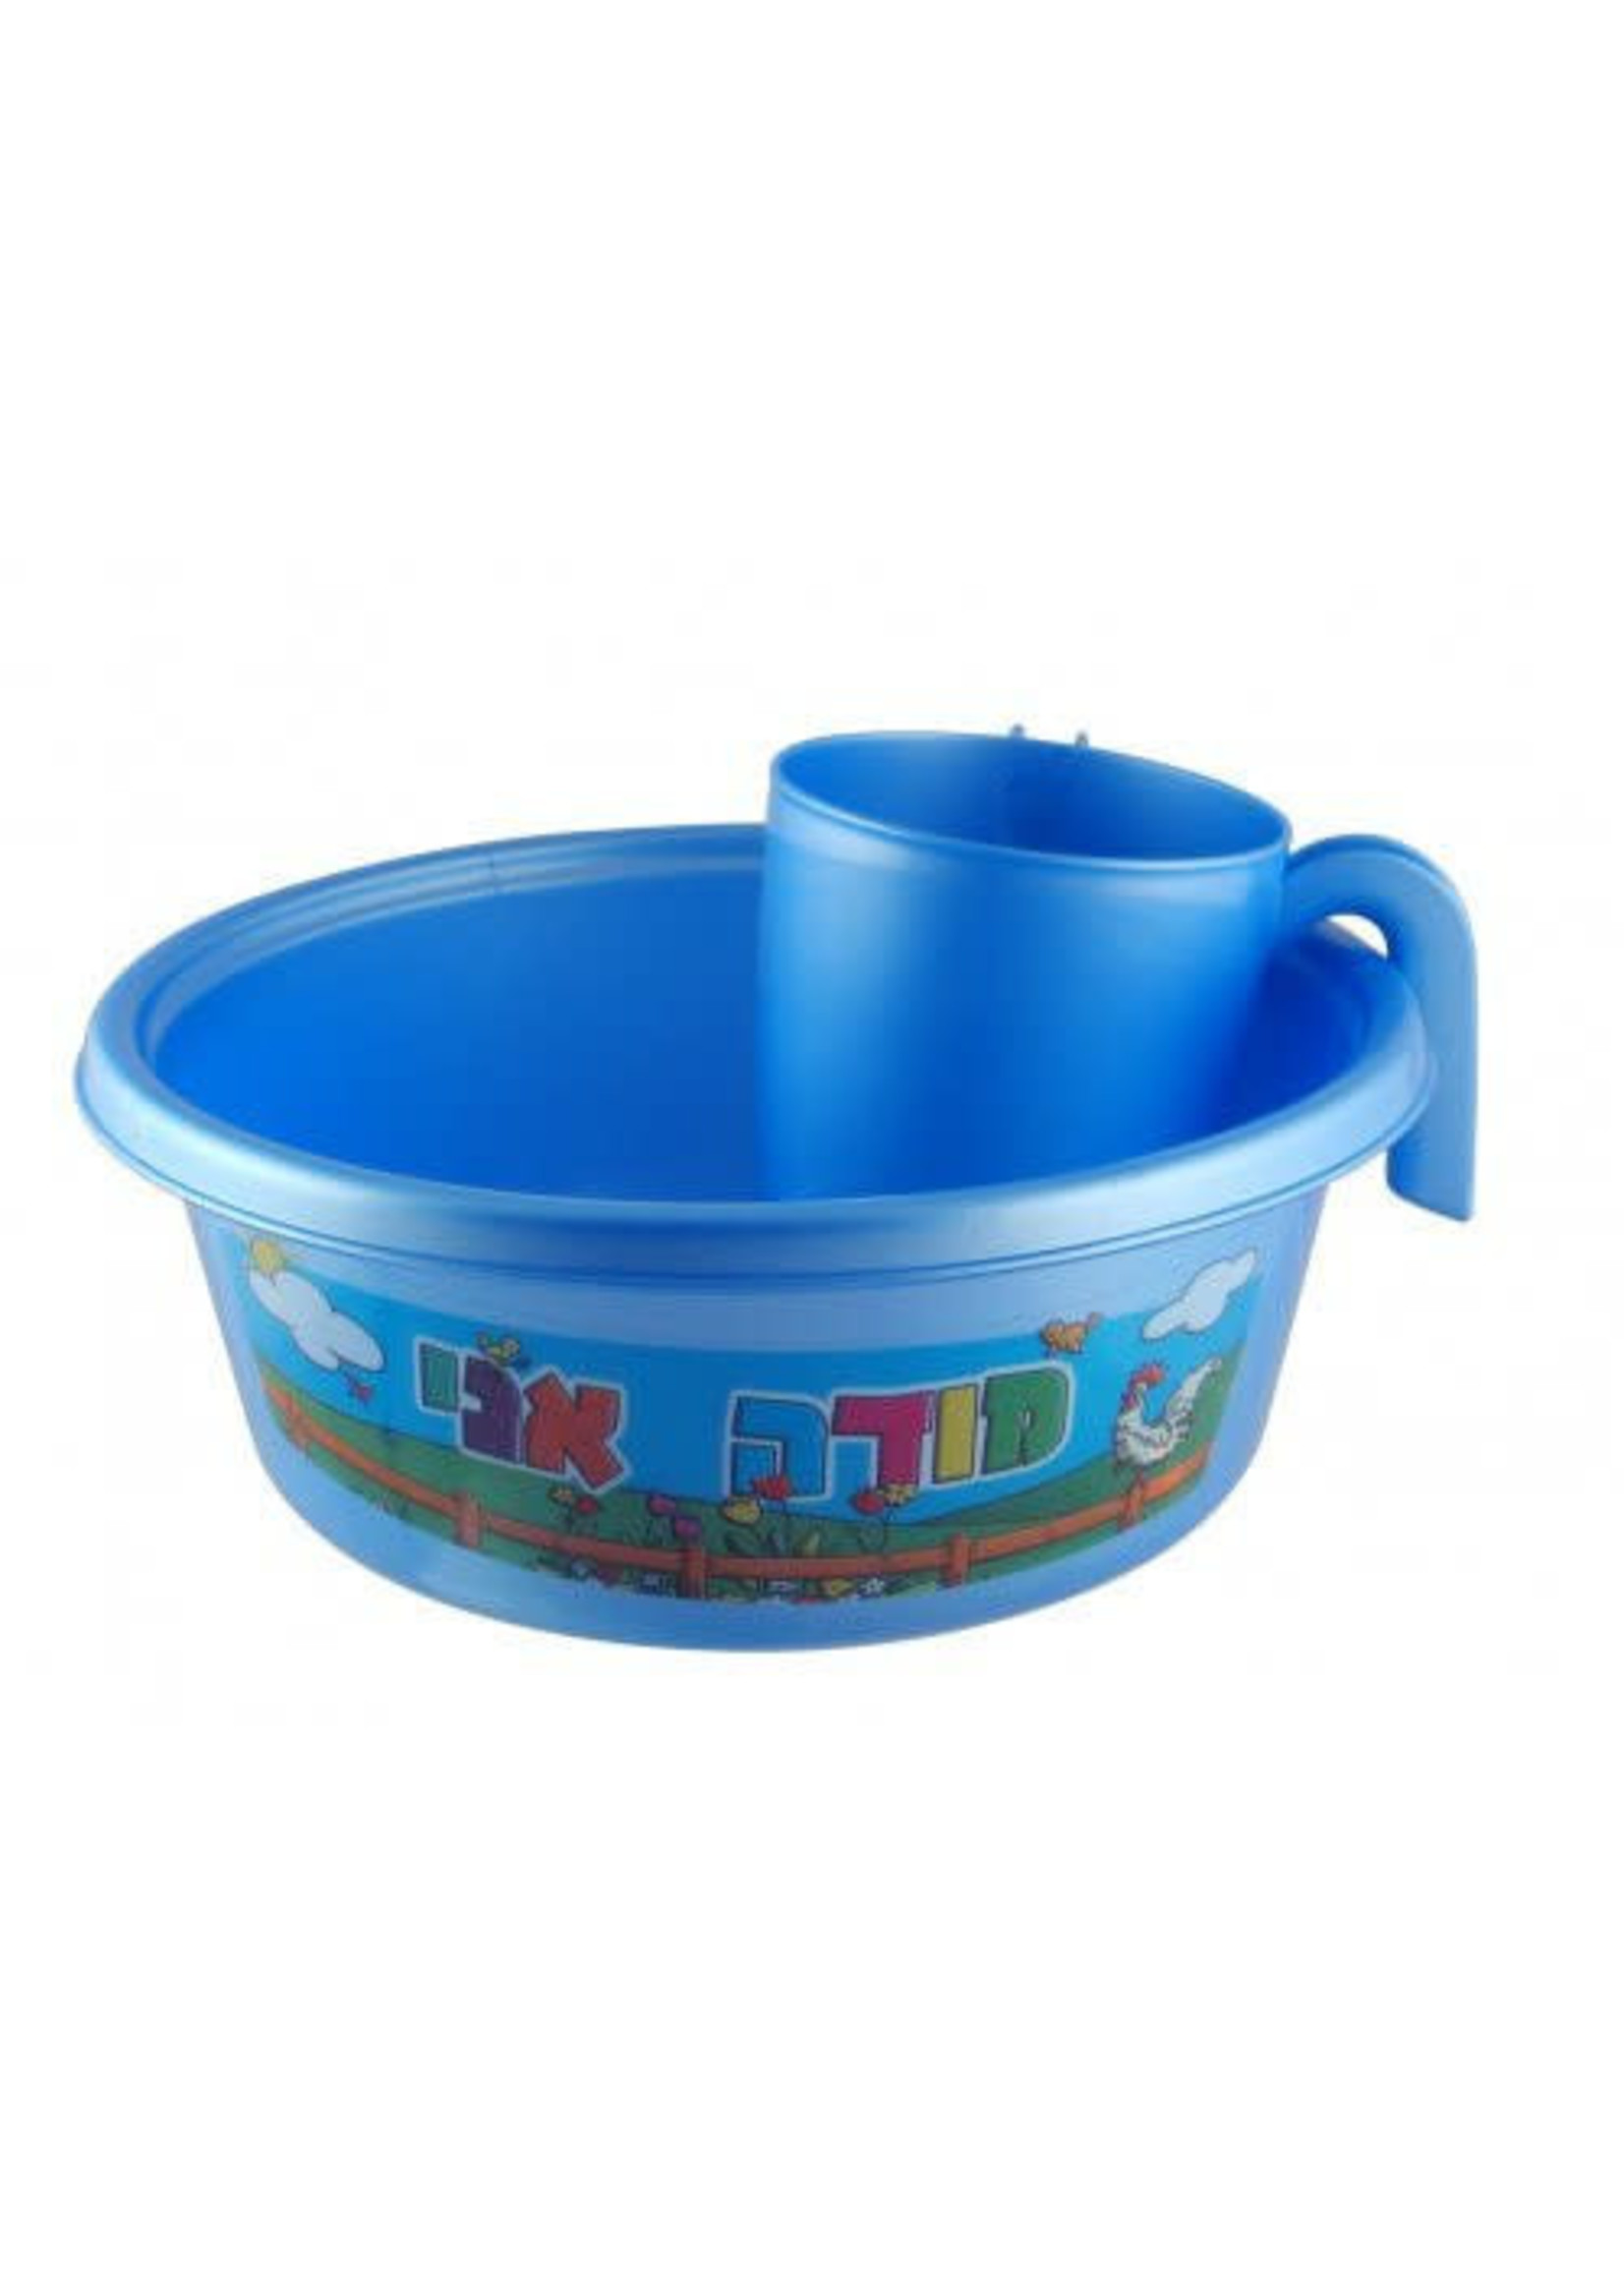 WASH CUP & BOWL SET FOR KIDS